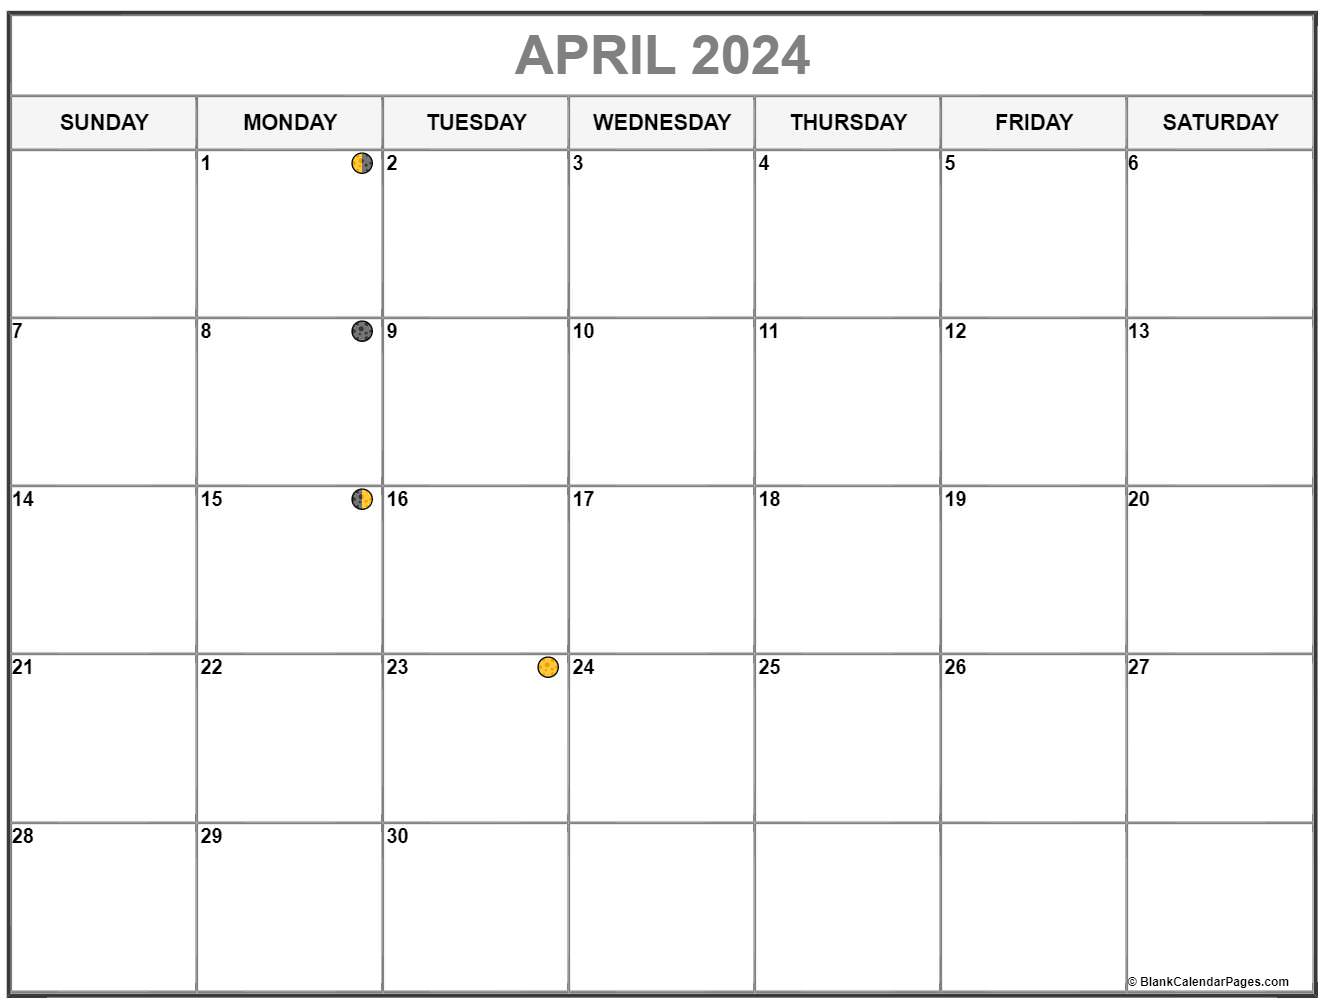 Moon Phase Calendar April 2022 April 2022 Lunar Calendar | Moon Phase Calendar